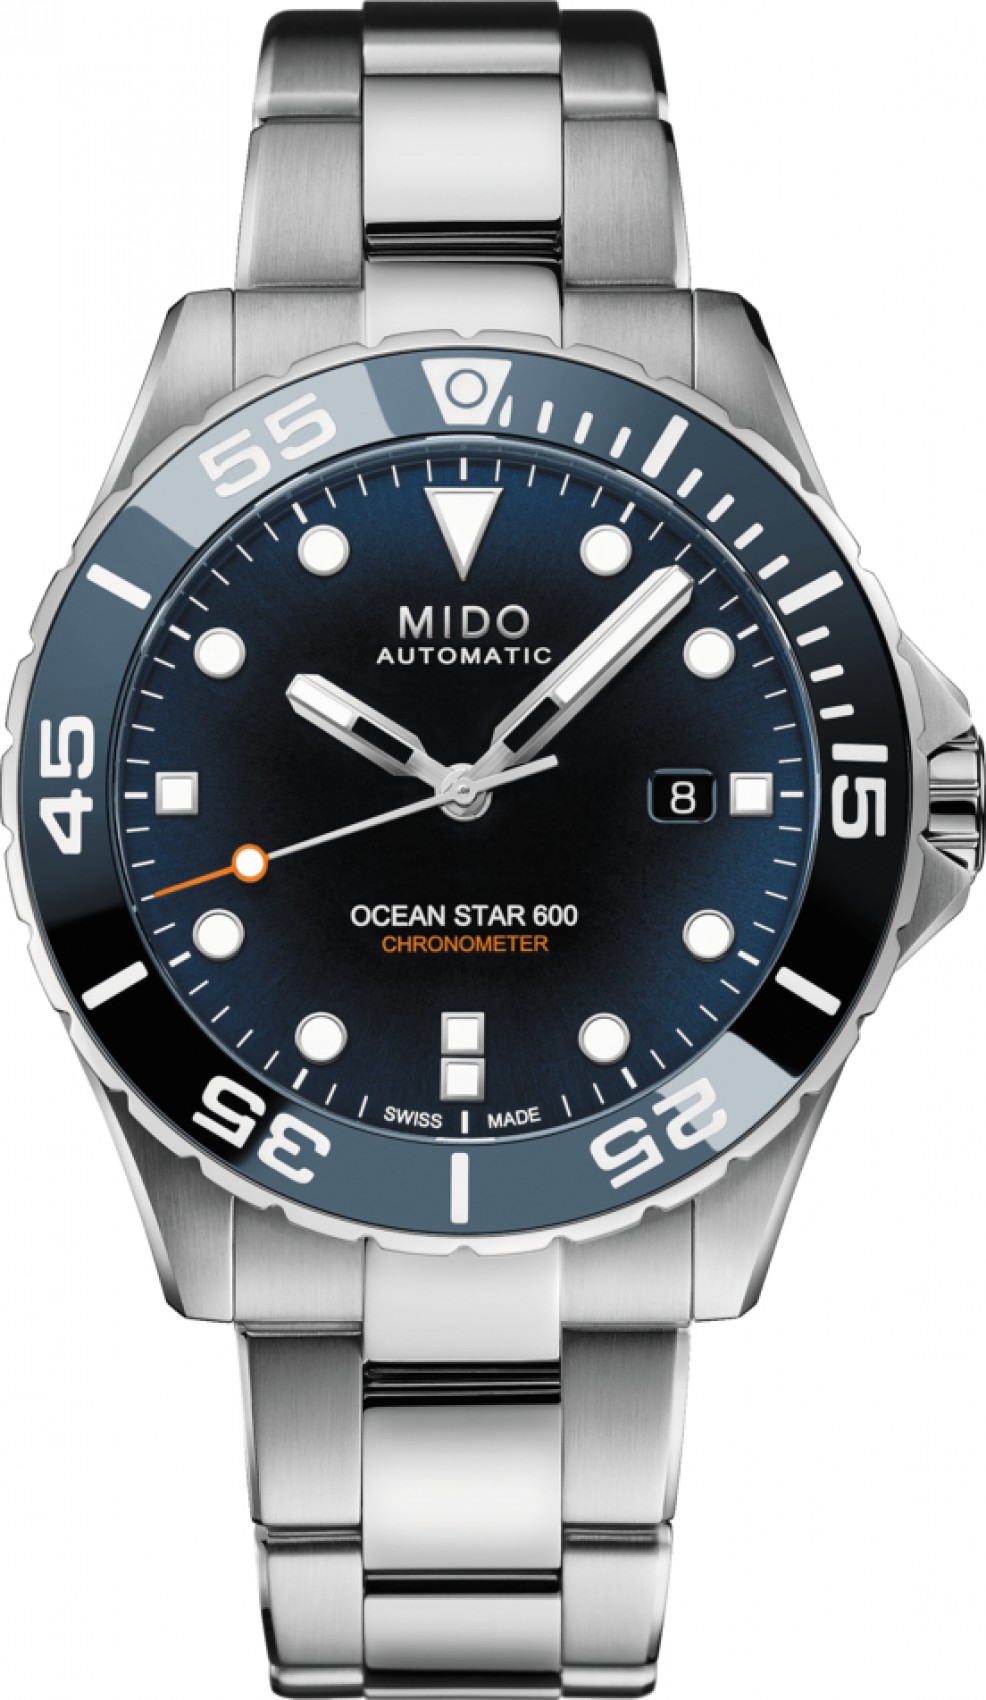 MIDO OCEAN STAR 600 CHRONOMETER COSC